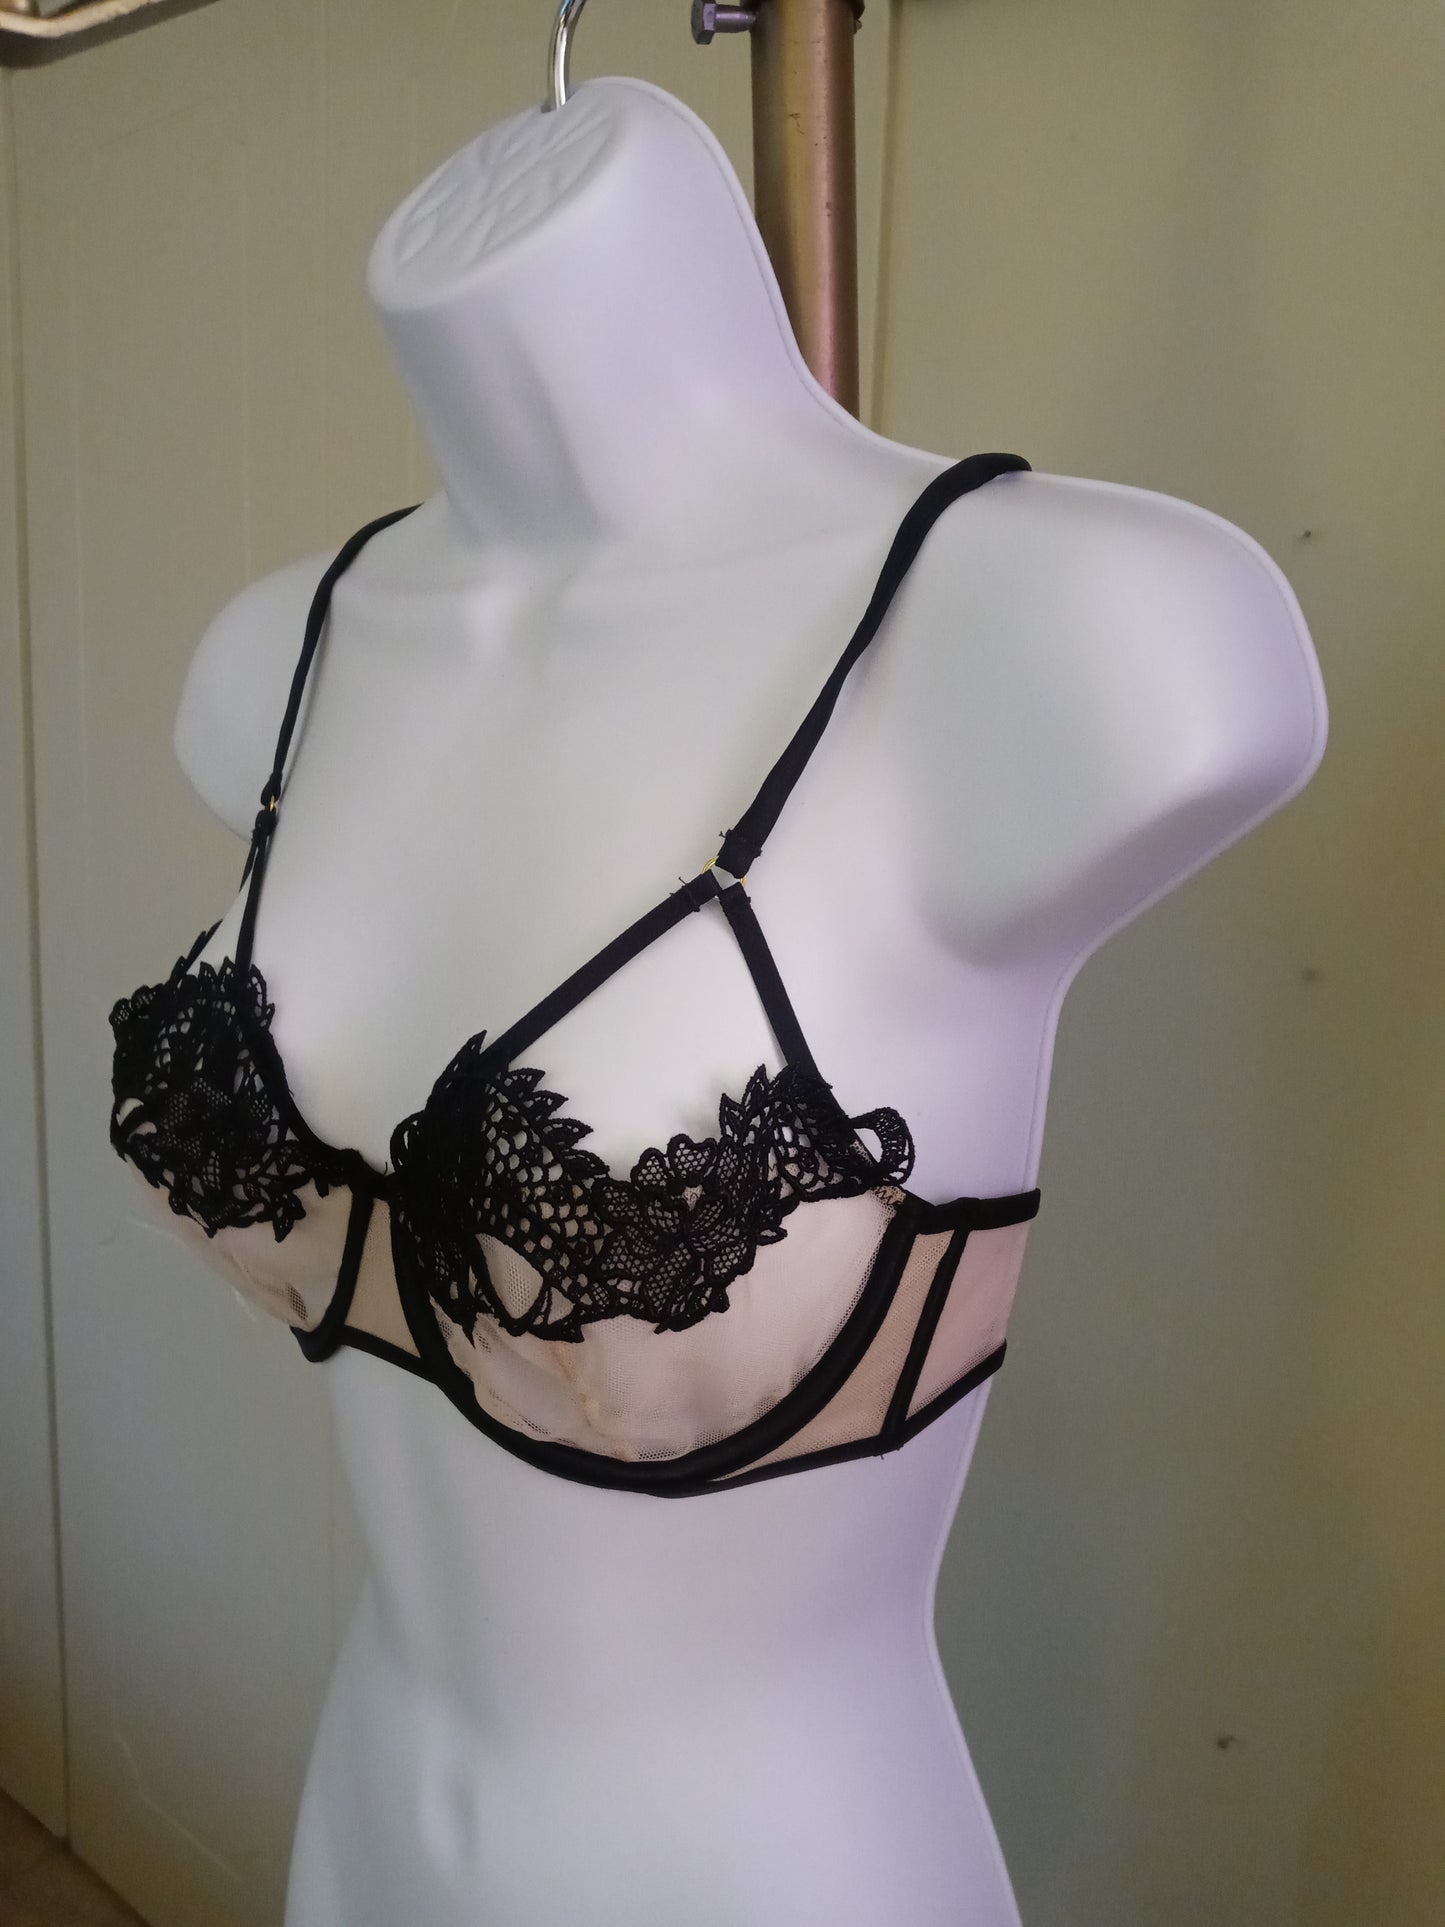 Victoria's secret bra Size 34B